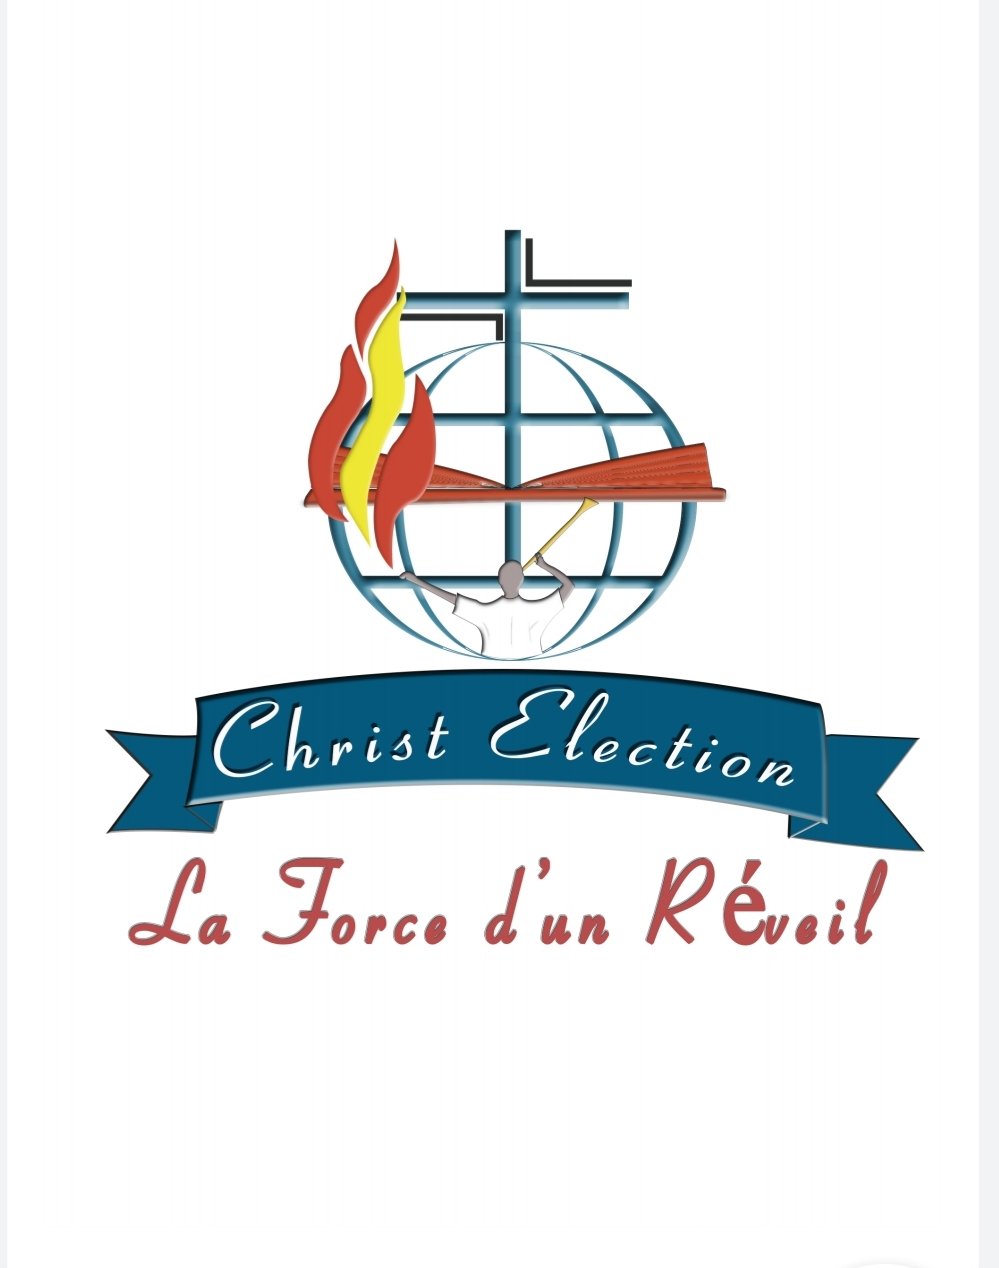 Christ Election